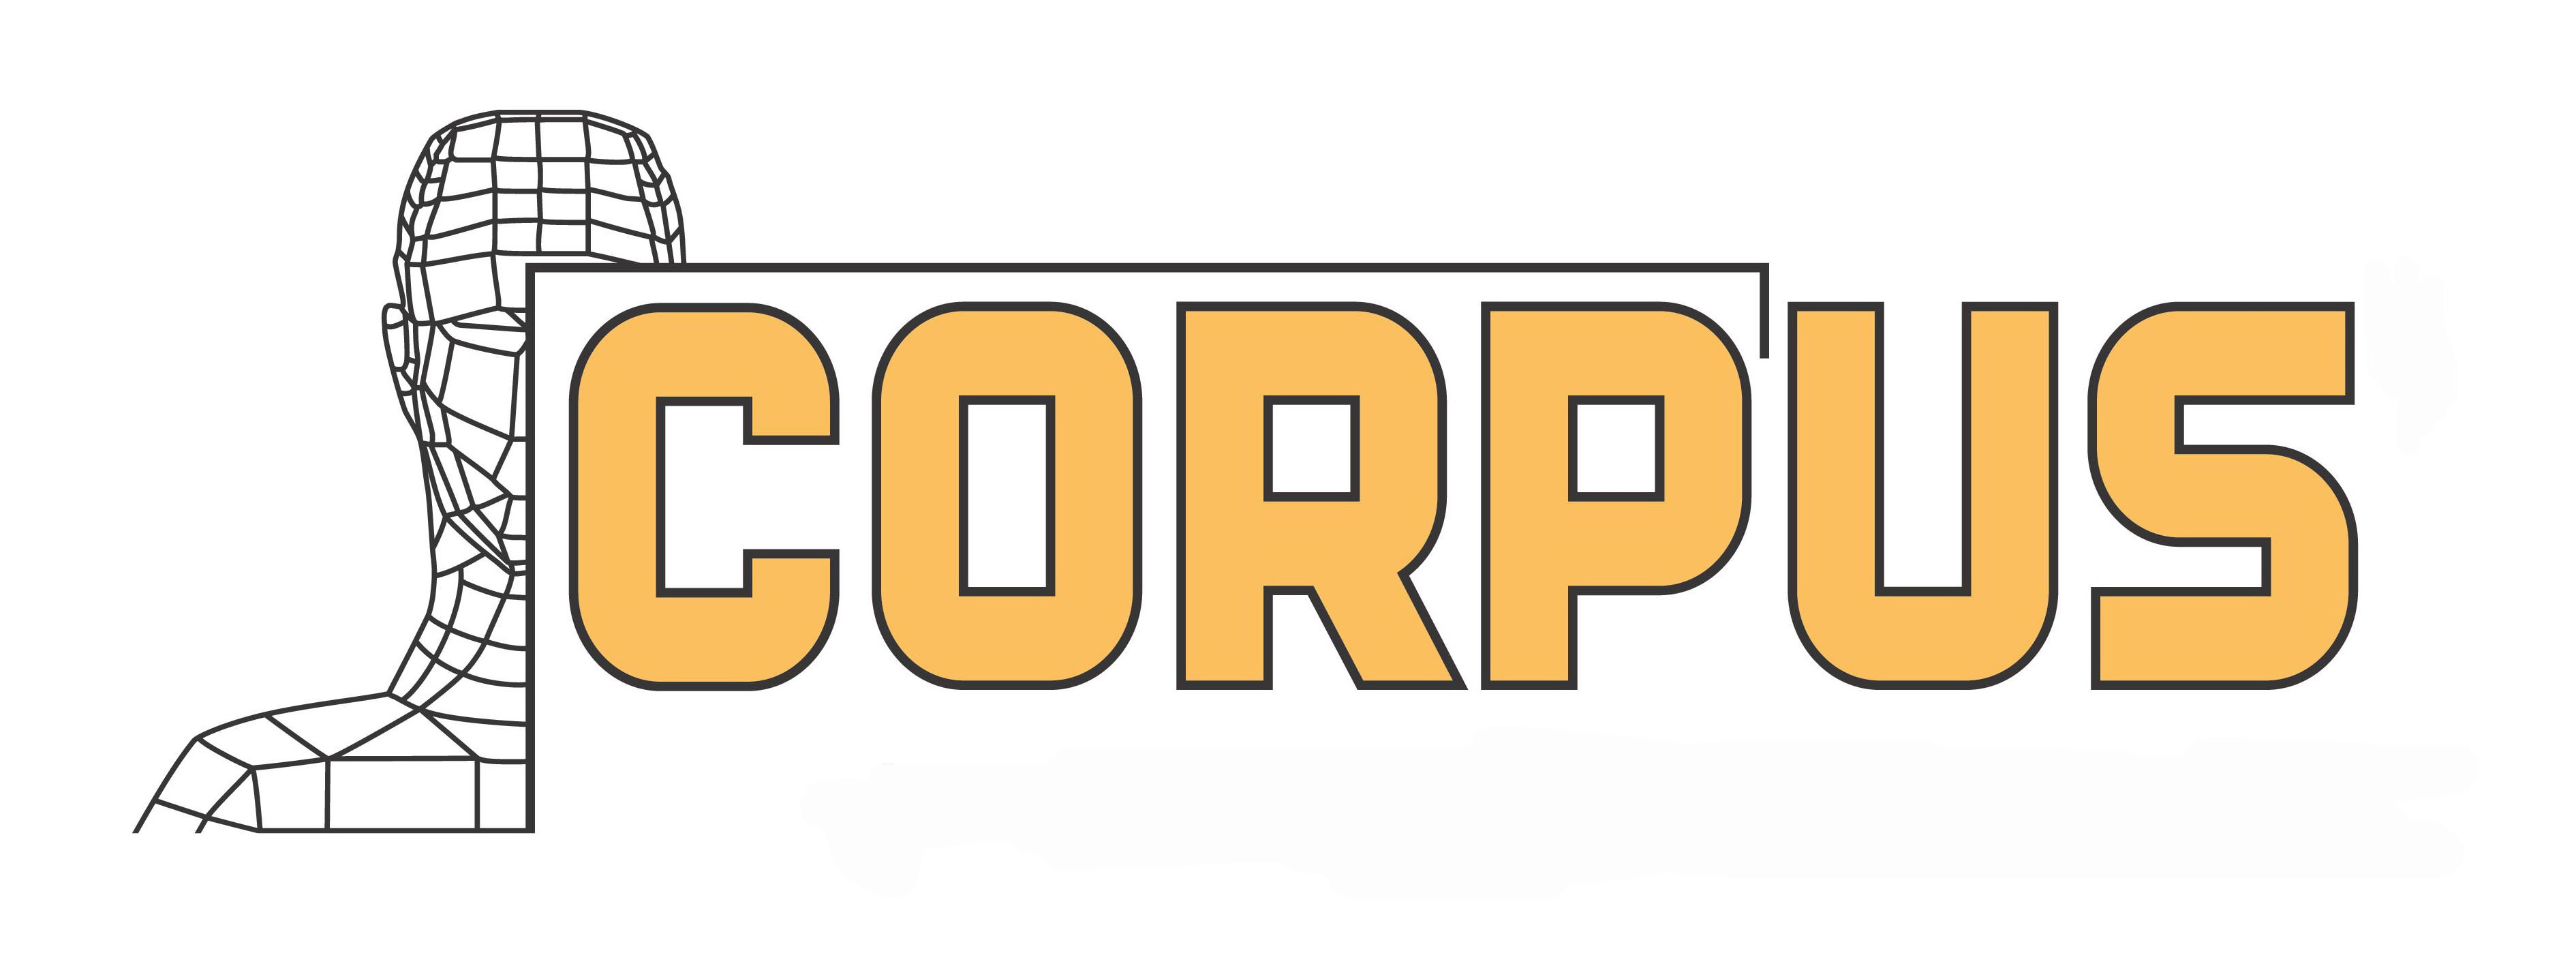 Trademark Logo CORPUS